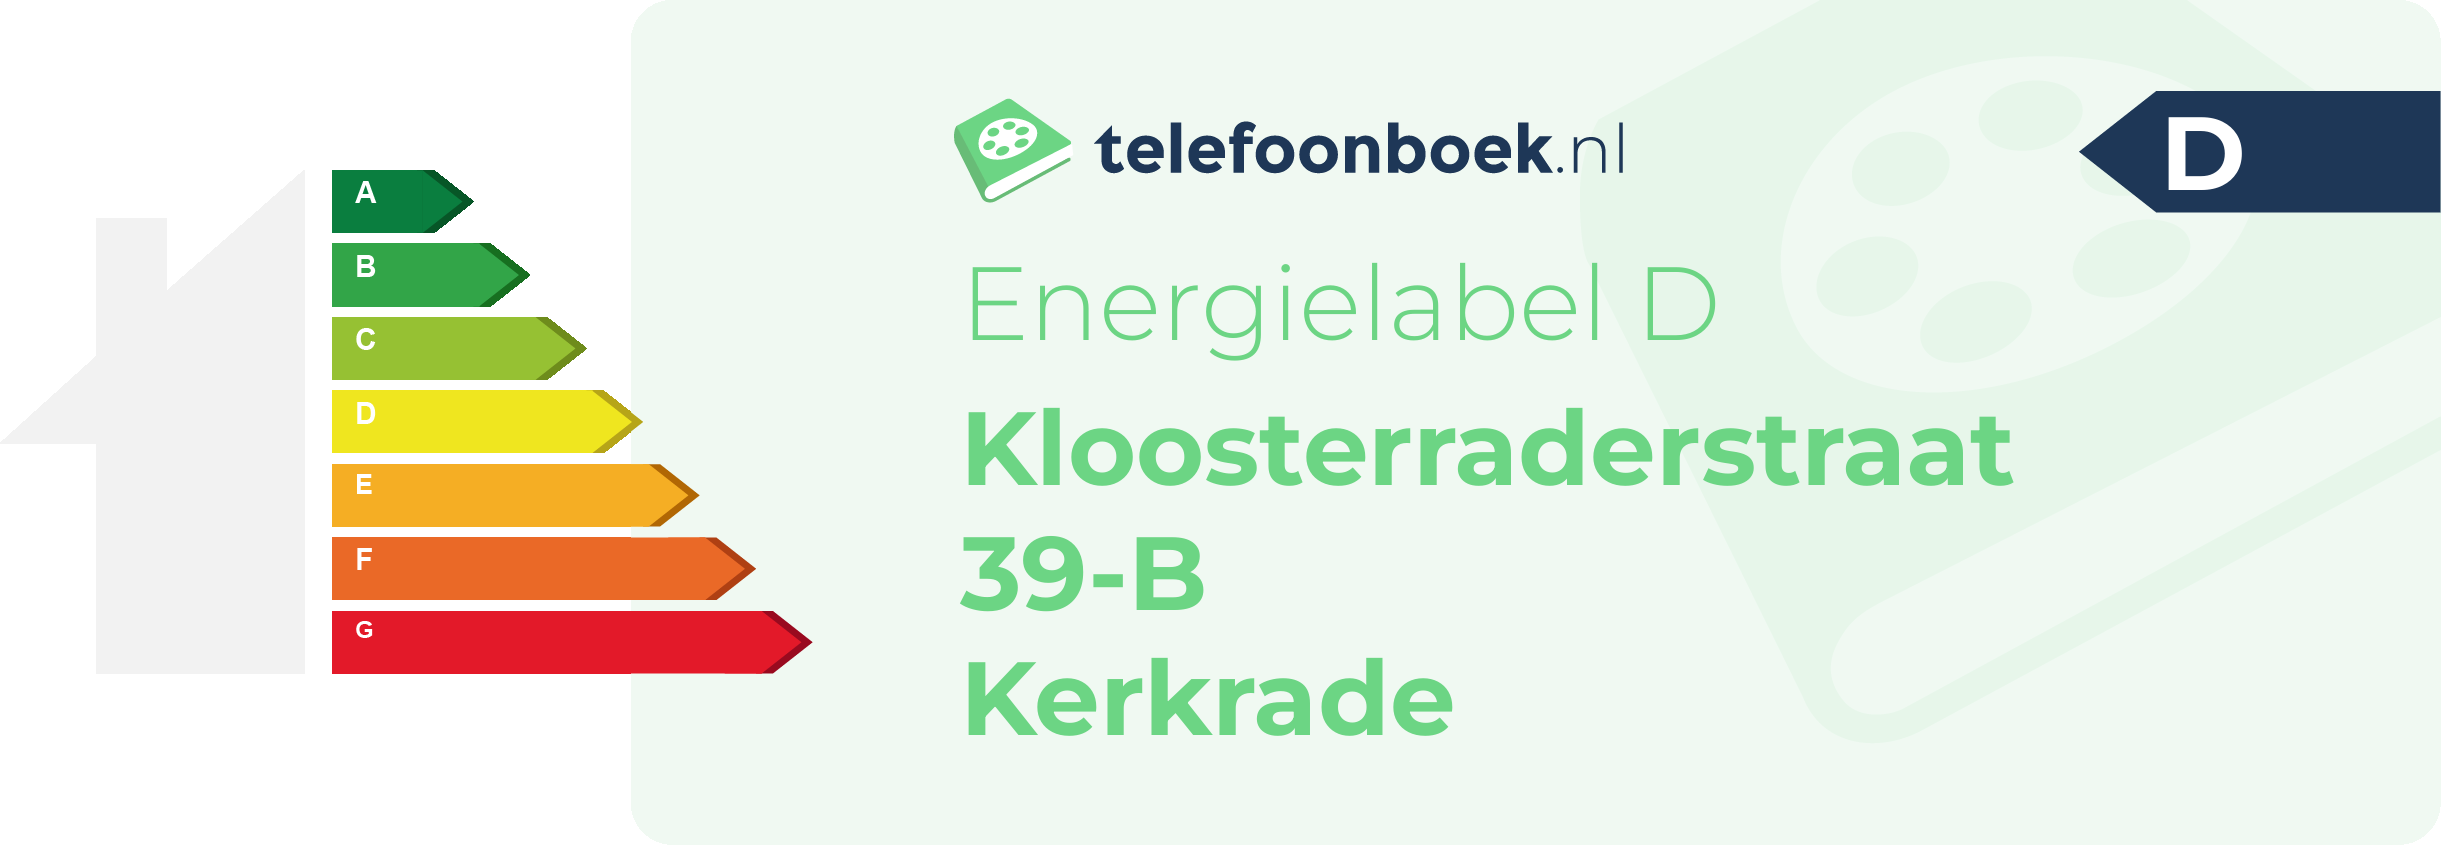 Energielabel Kloosterraderstraat 39-B Kerkrade